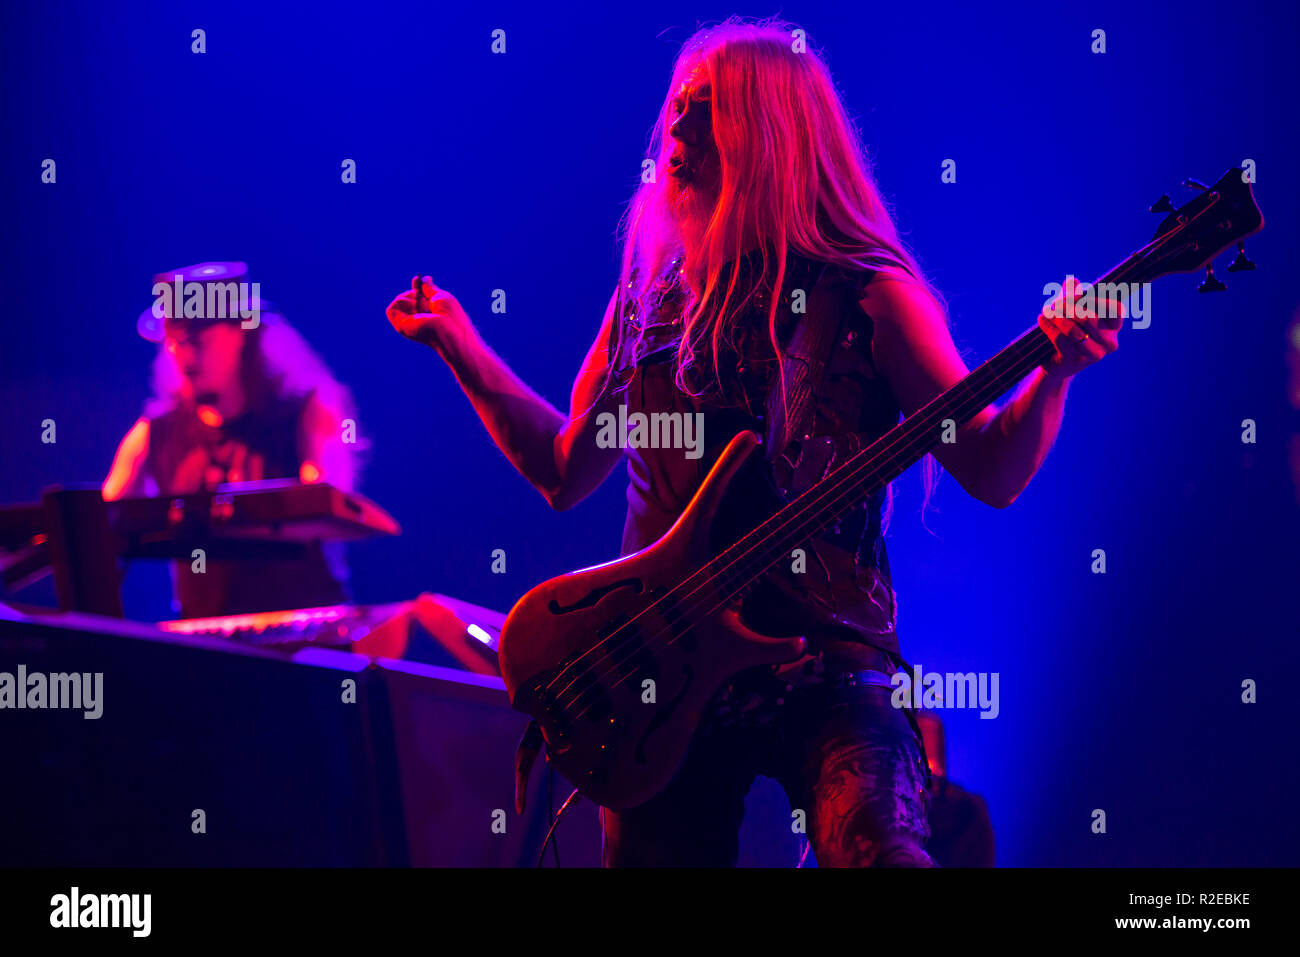 BRATISLAVA, SLOVAKIA - NOV 13, 2018: Bass guitar player and singer Marco Hietala - Nightwish, the Finnish symphonic metal band, performs a live concer Stock Photo